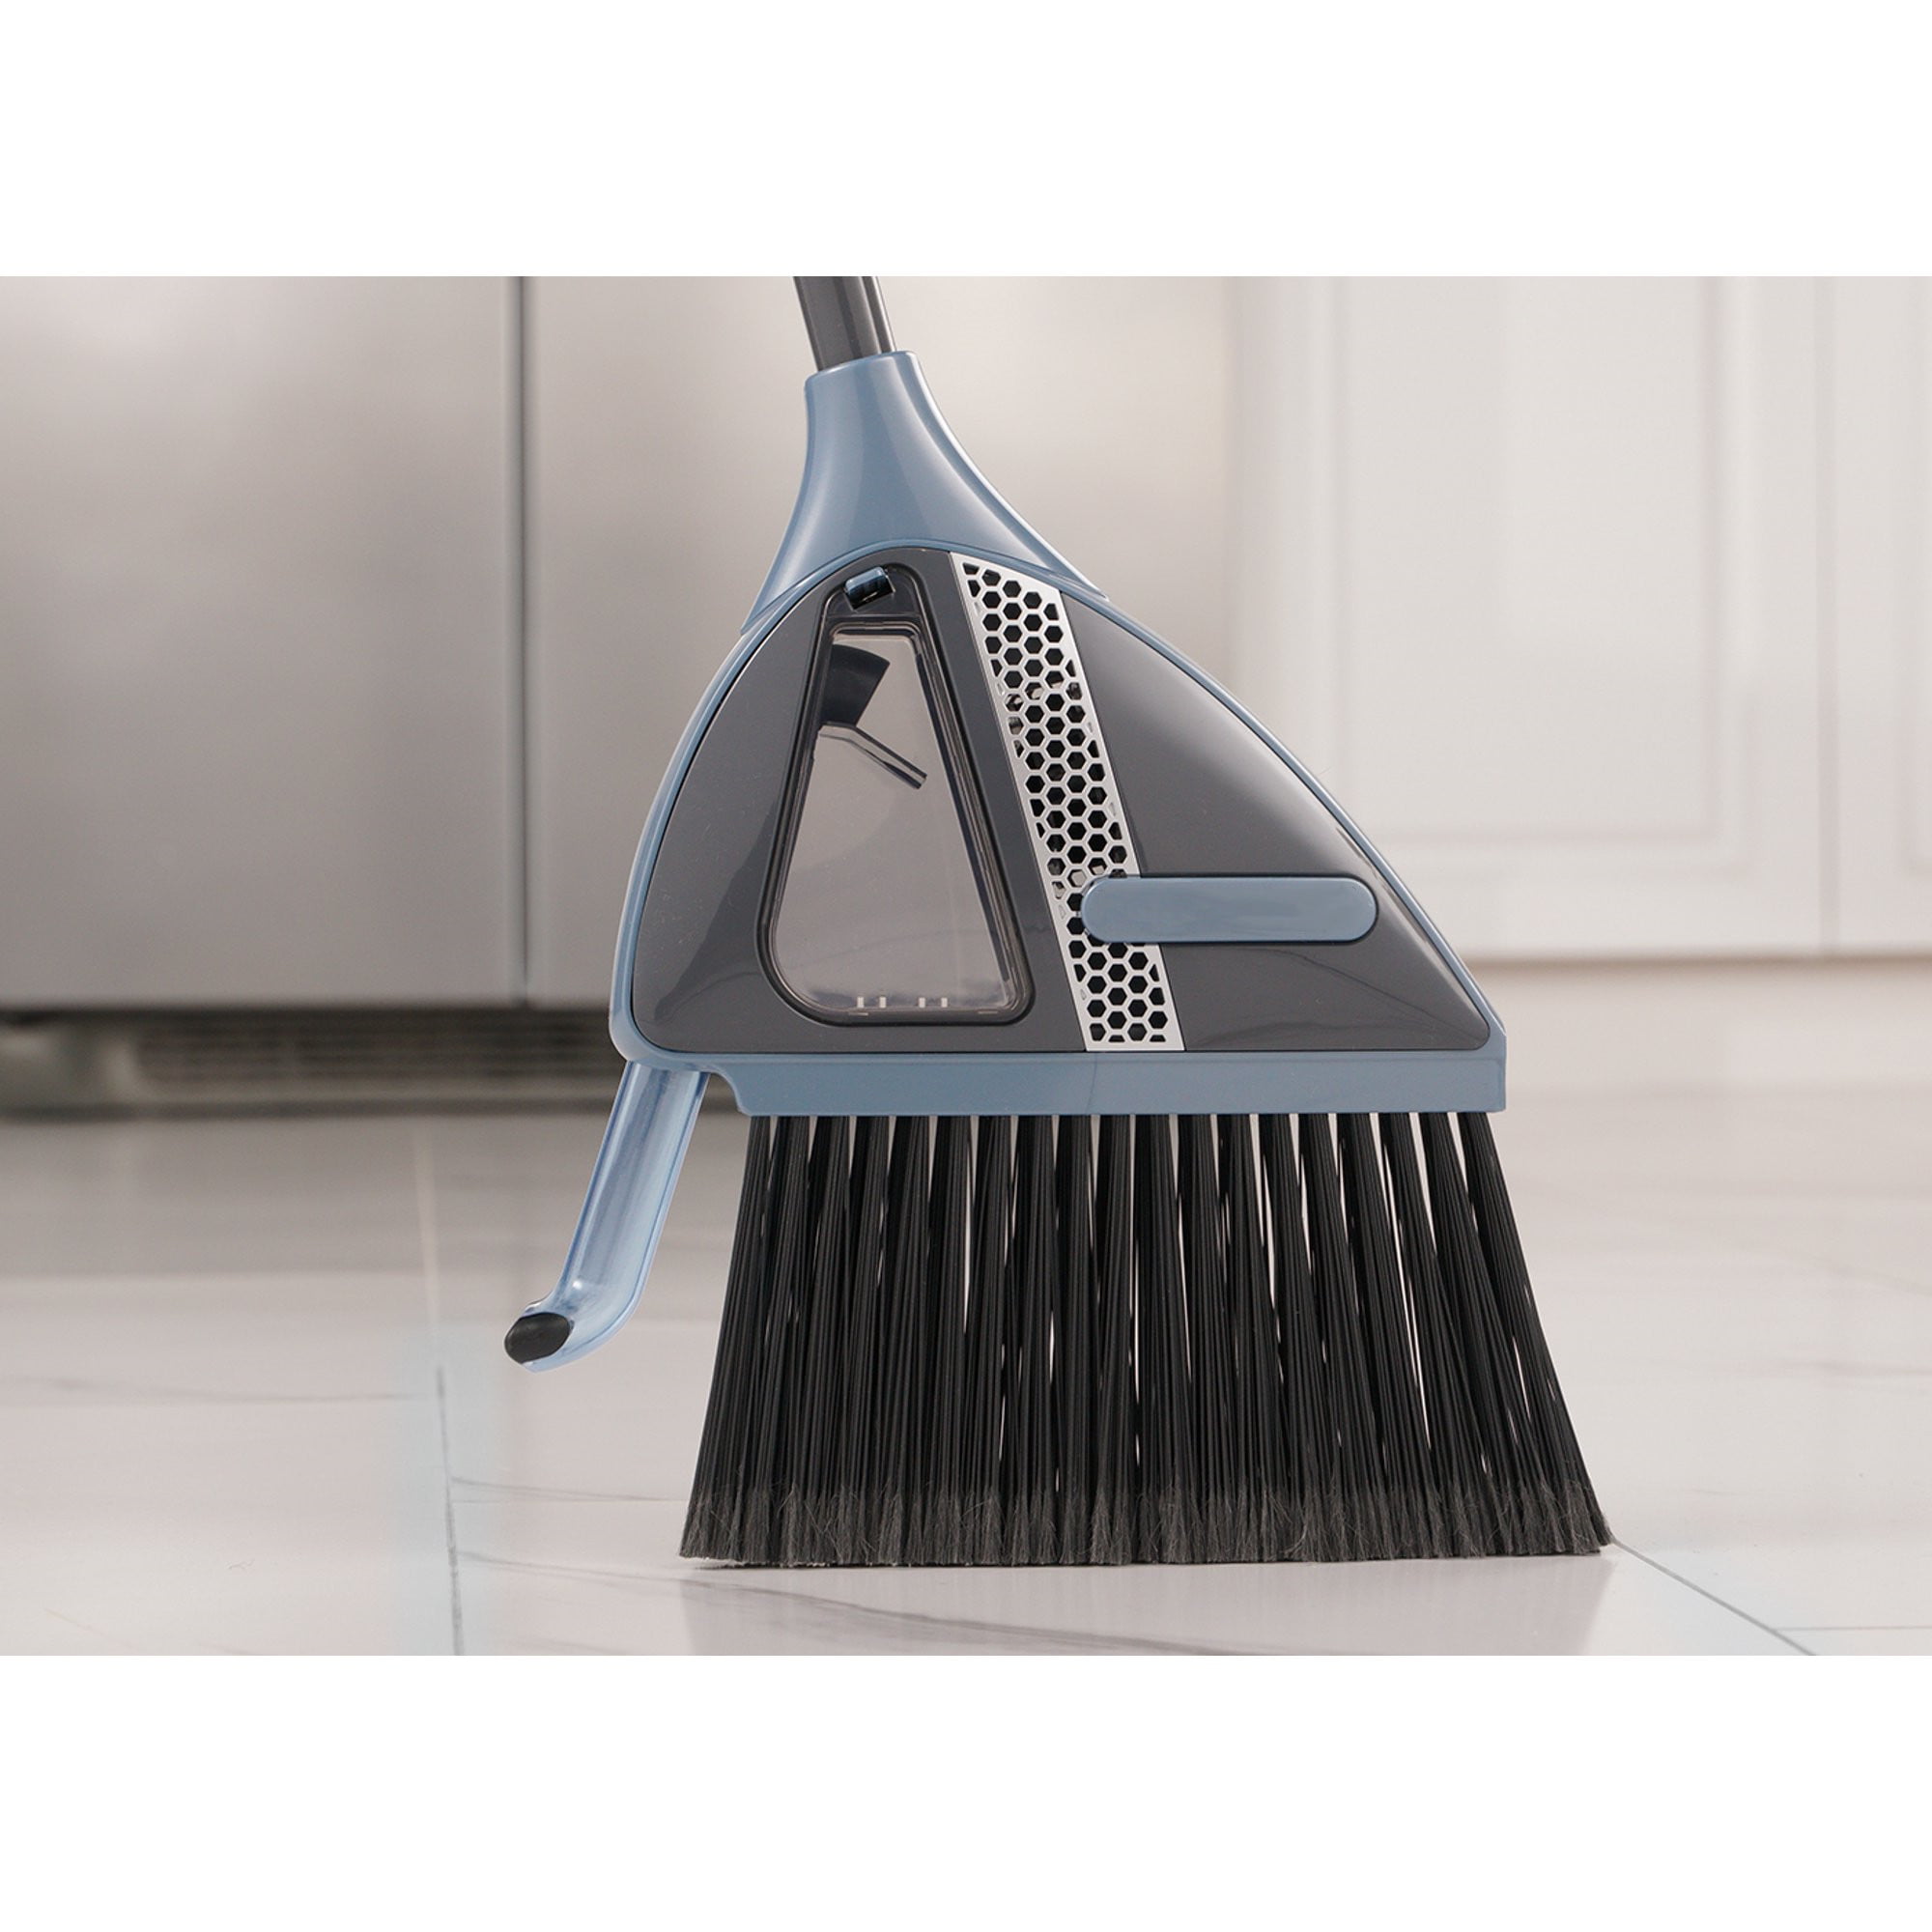 YoL Long handle handheld dustpan & brush 4 piece set sweeping cleaning home blue